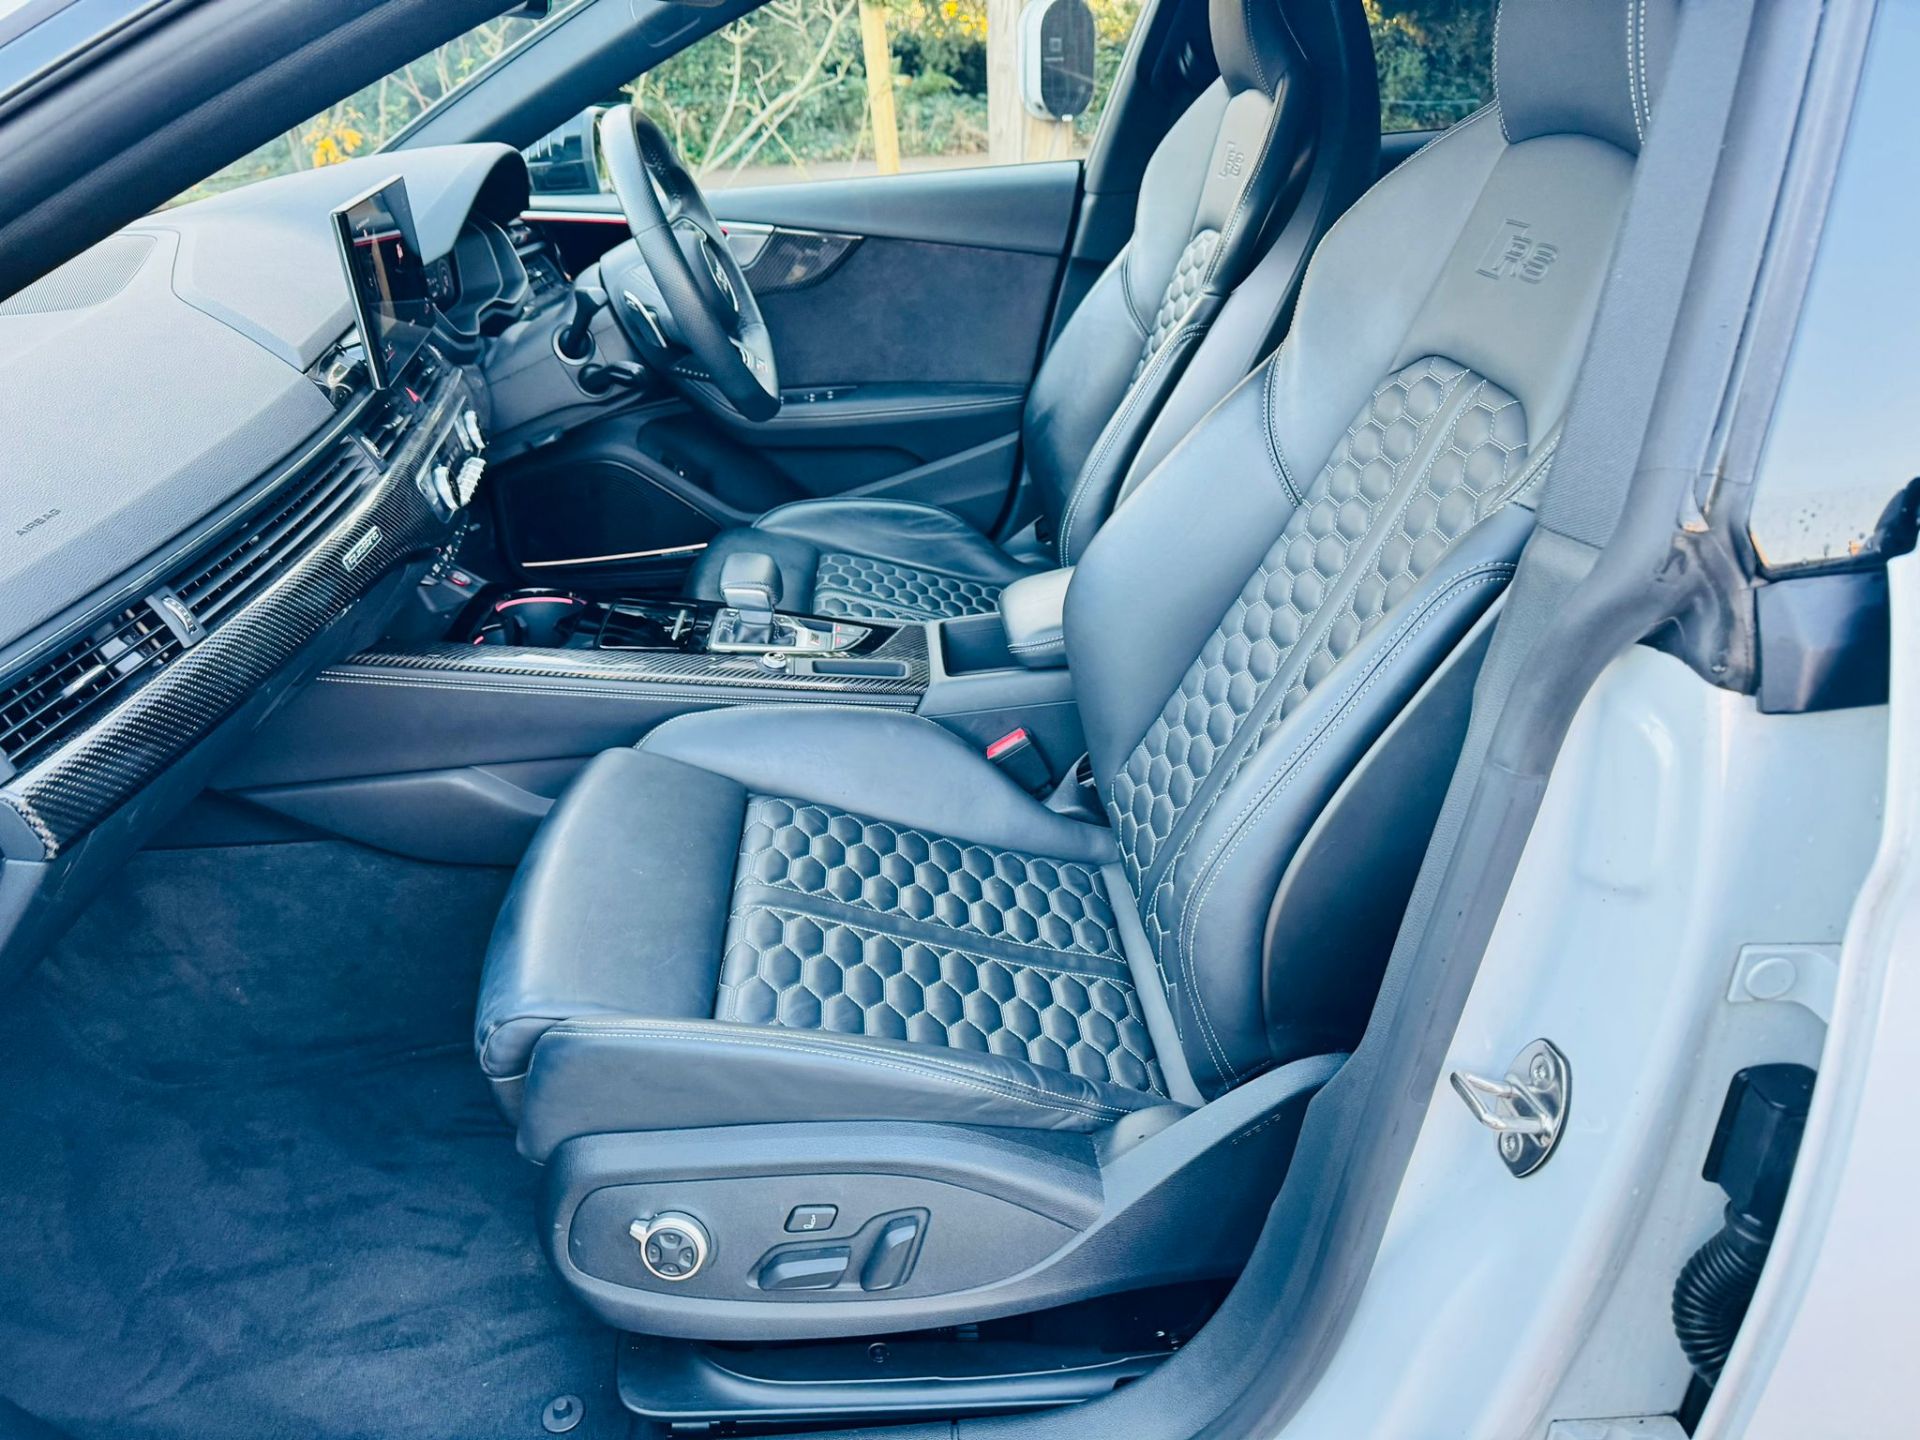 Audi RS5 TFSI "CARBON BLACK EDITION" QUATTRO (450BHP) 2021 21 Reg “HUGE SPEC” 1 OWNER 18K MILES - Image 17 of 36